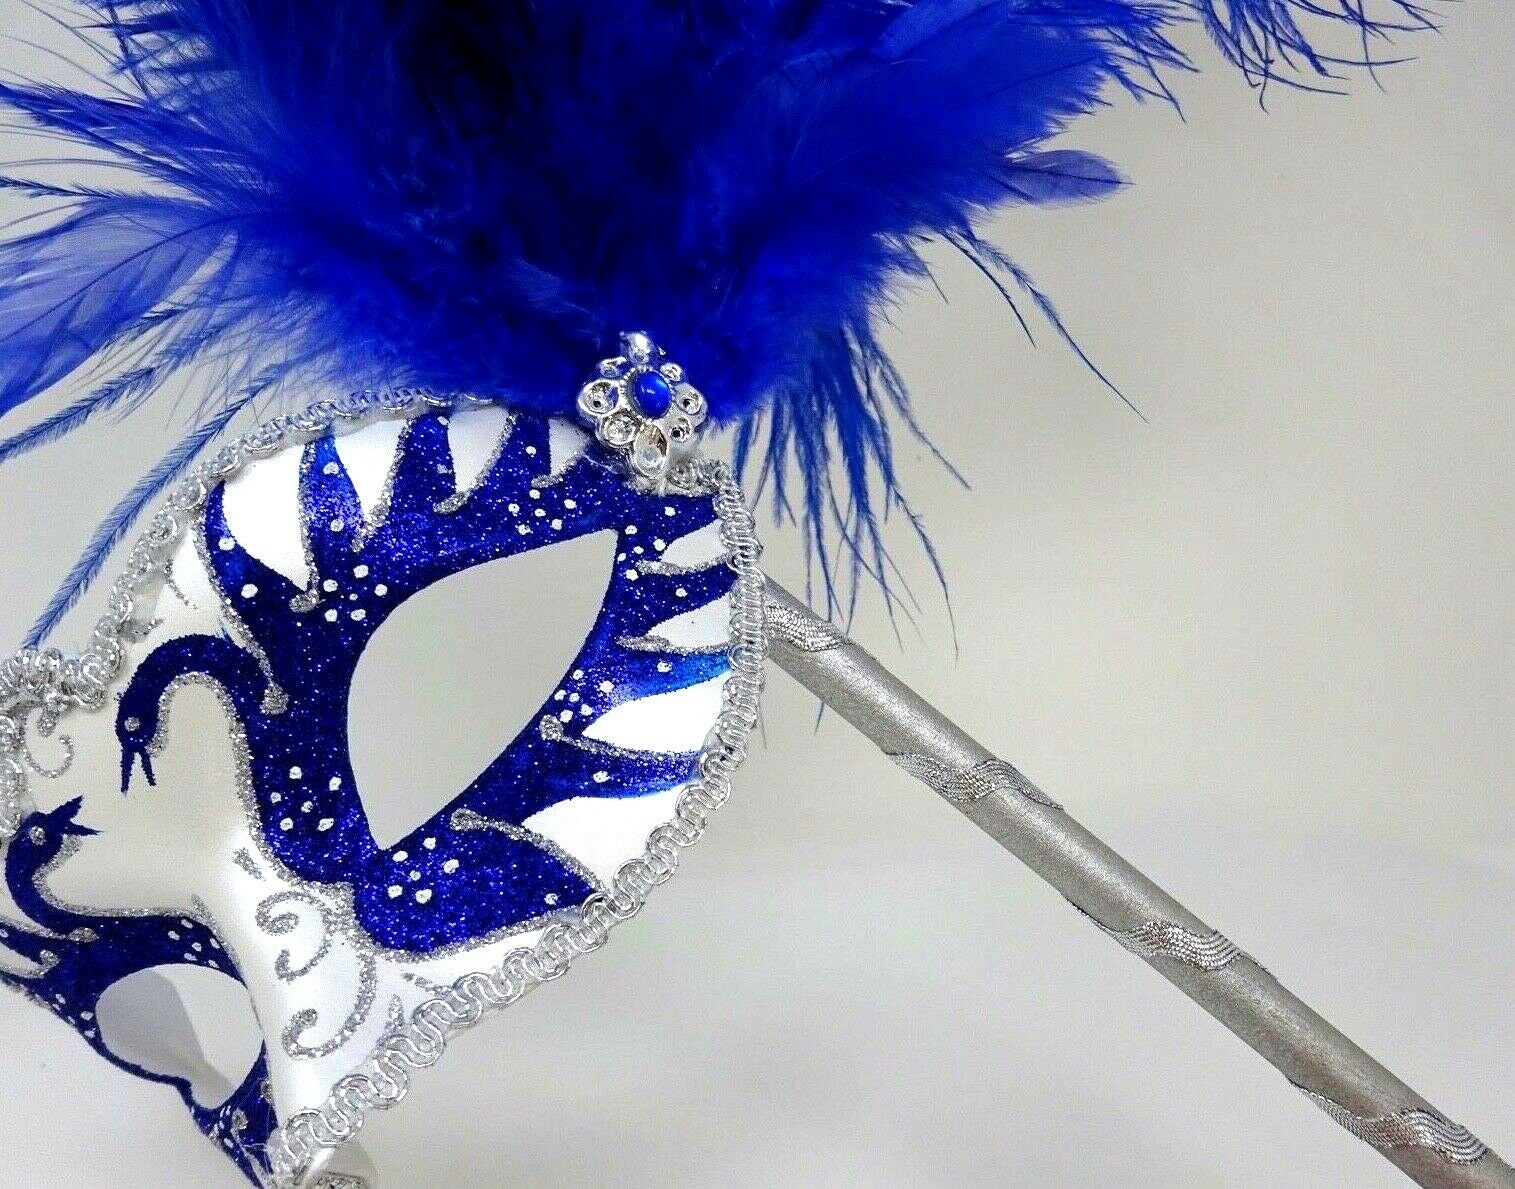 Mardi Gras Mask Feathers Women Masquerade Mask with Fishnet Veil and Feathers, Women's Mardi Gras Masquerade Mask